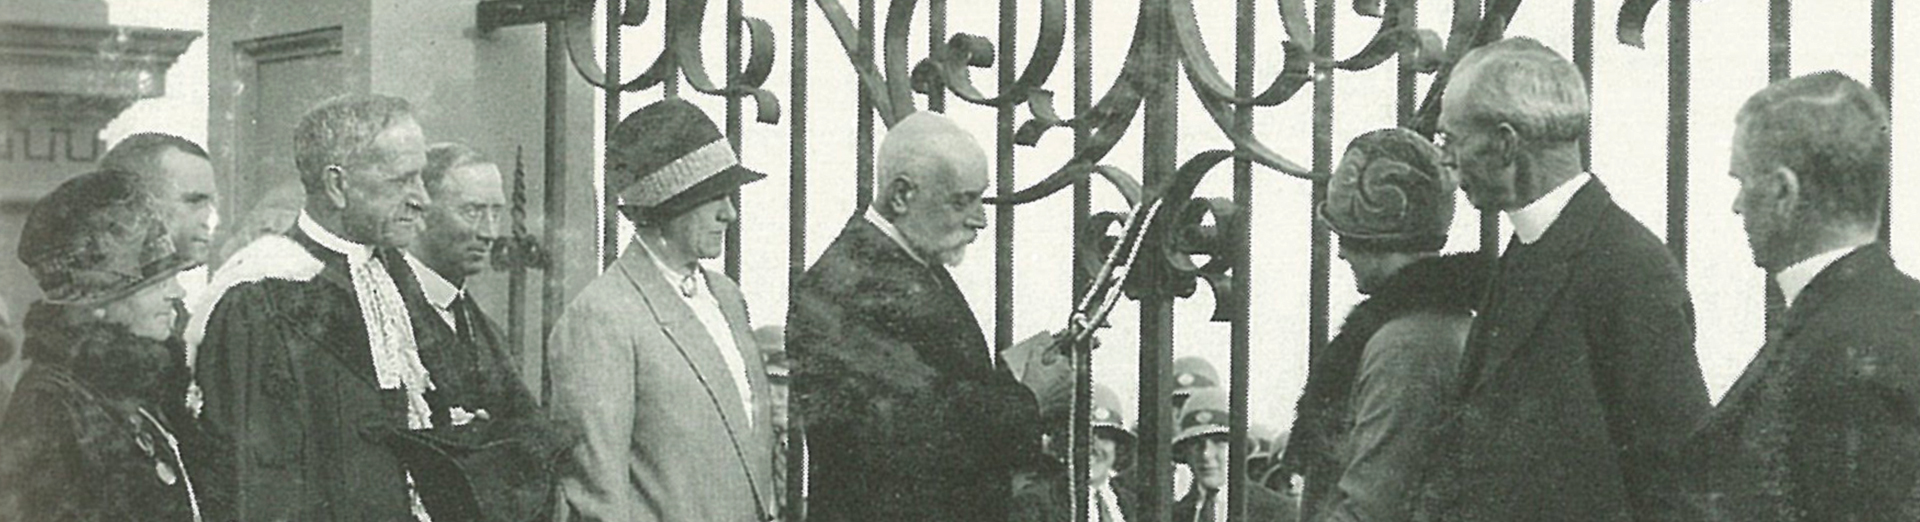 1927 Opening of the John Marden Memorial Gates